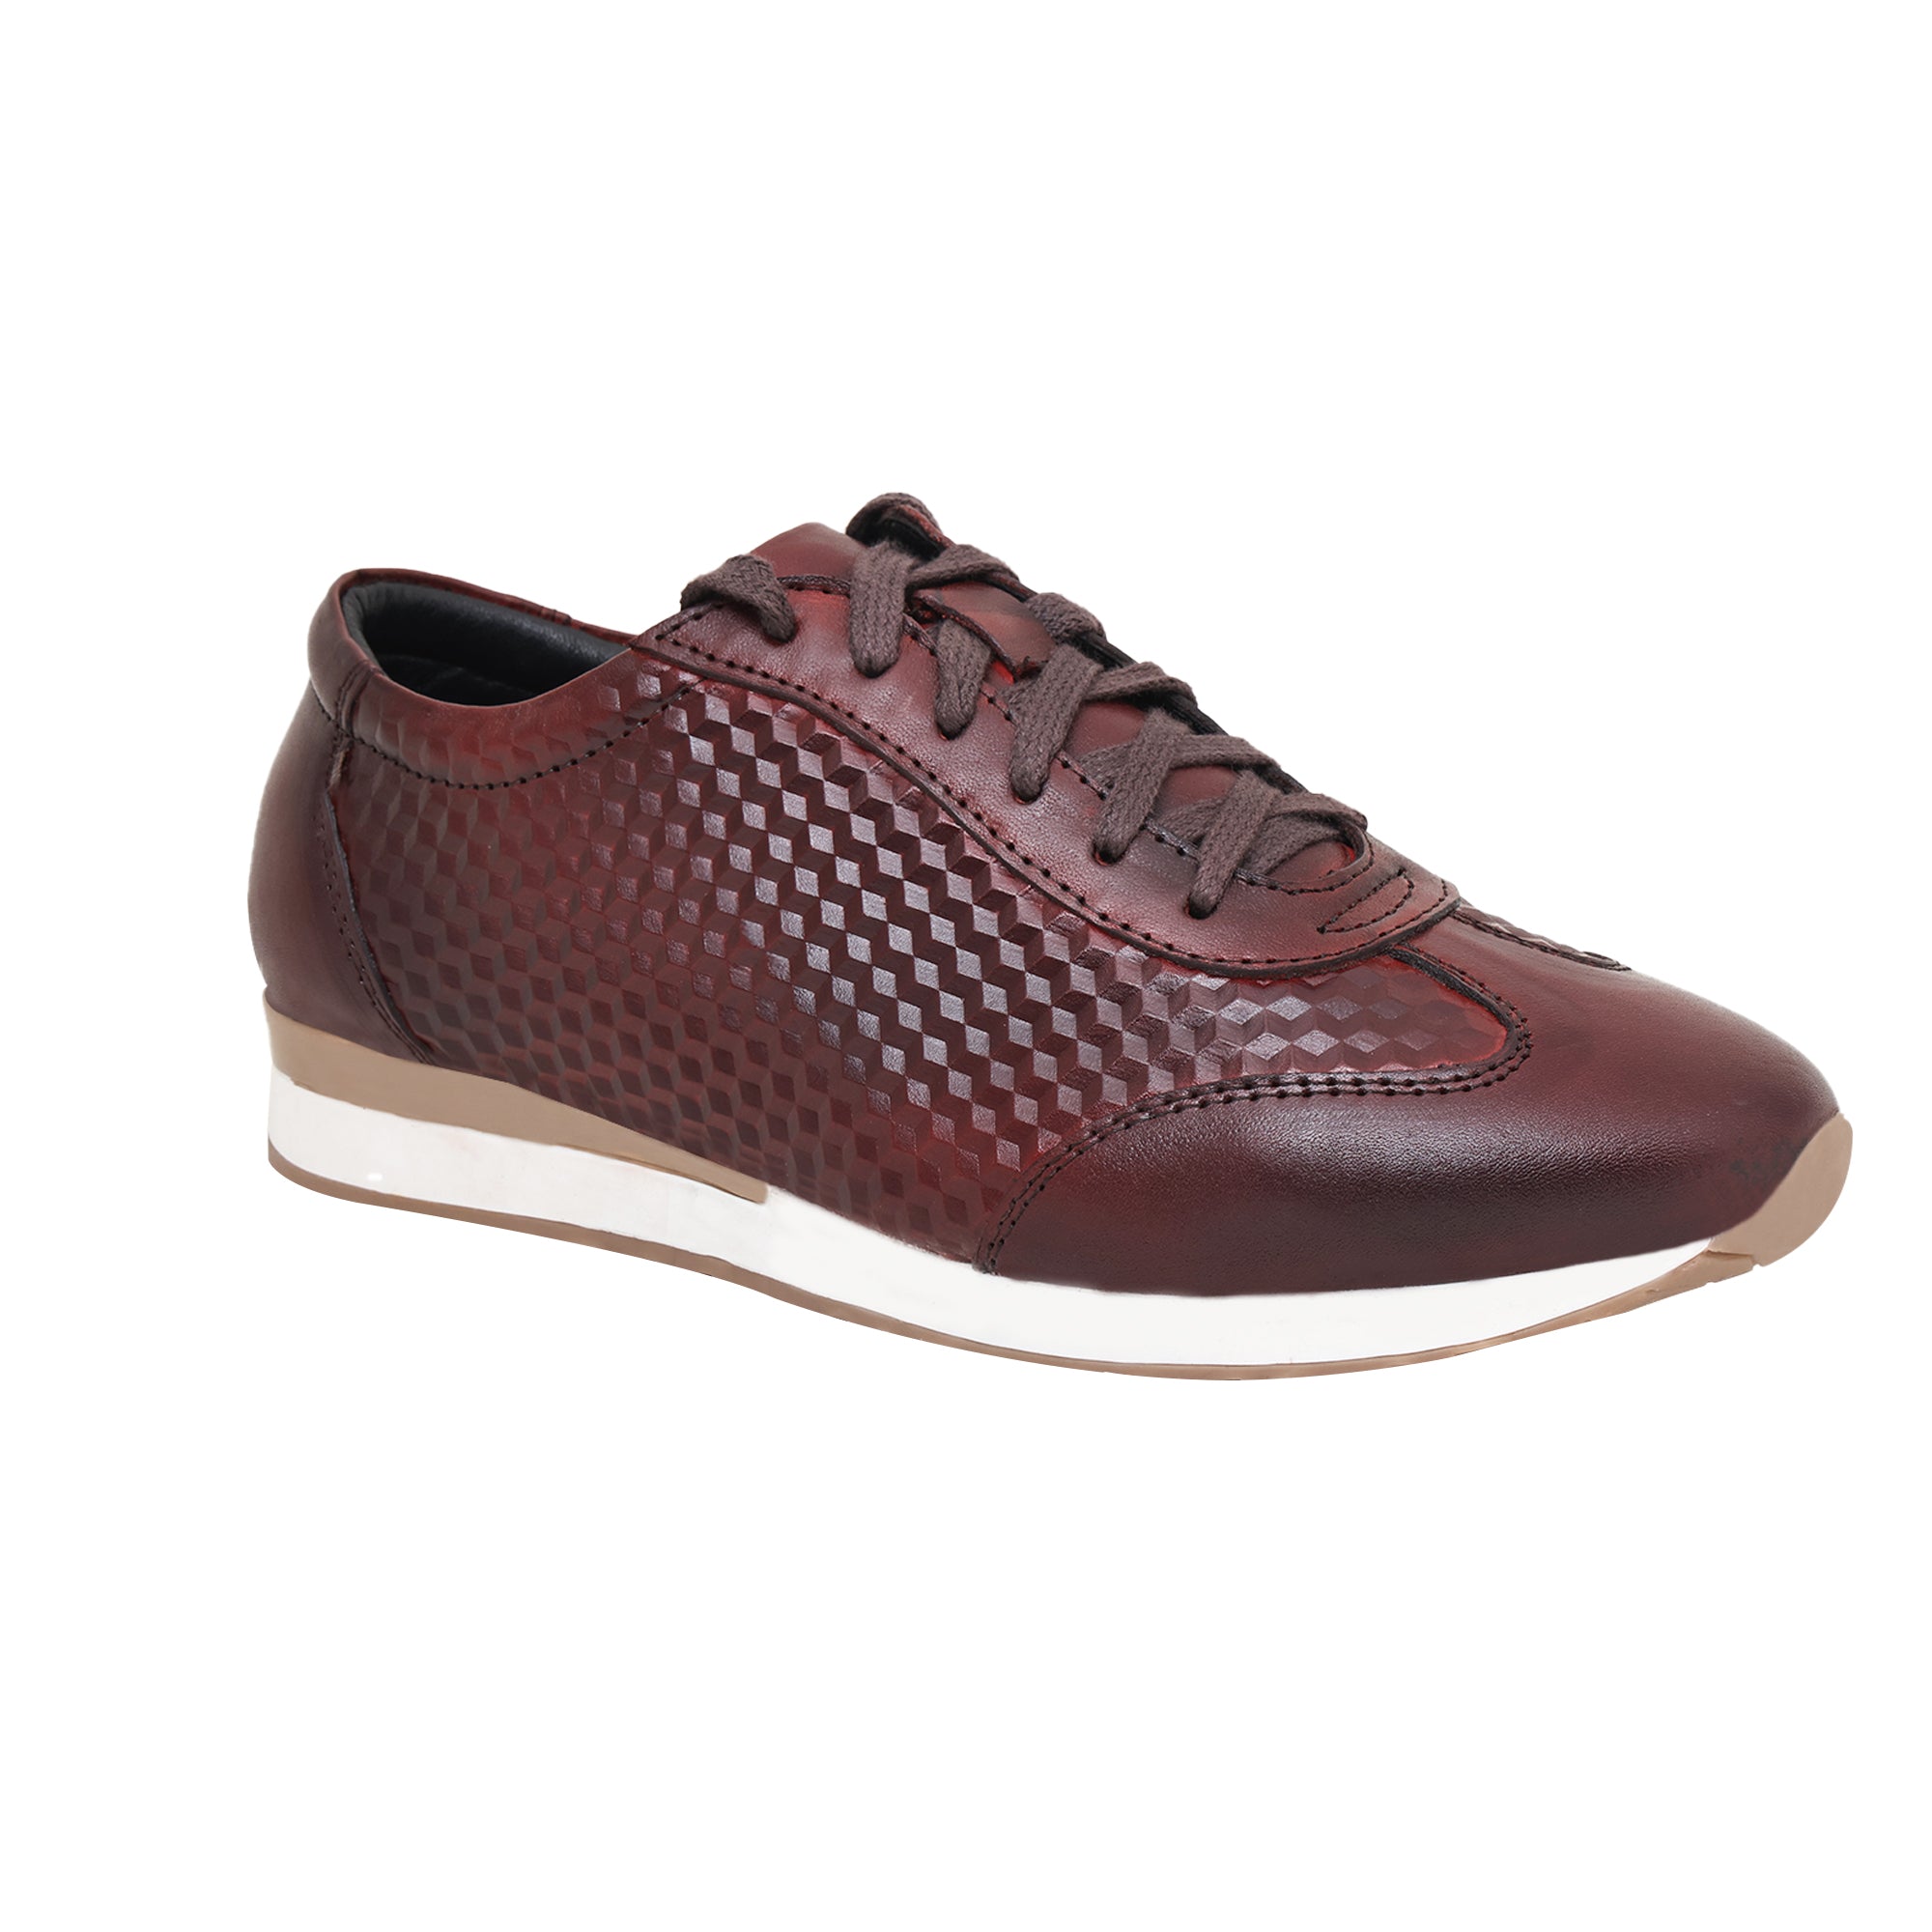 Louis Blanc Crust Leather Sport Shoes For Men's (LB06B)